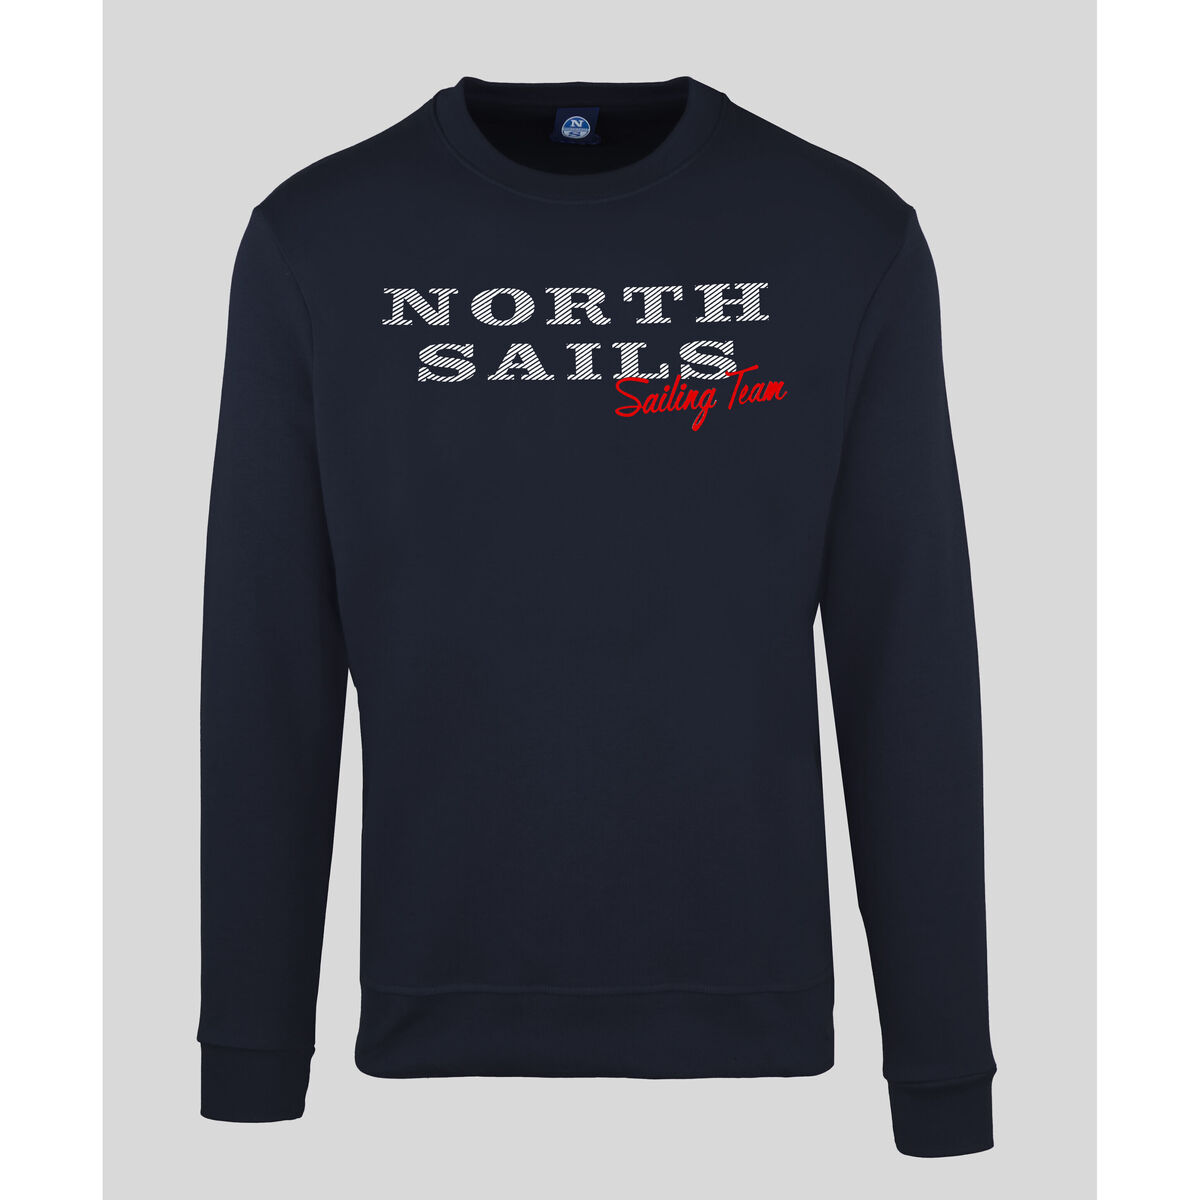 textil Hombre Sudaderas North Sails - 9022970 Azul